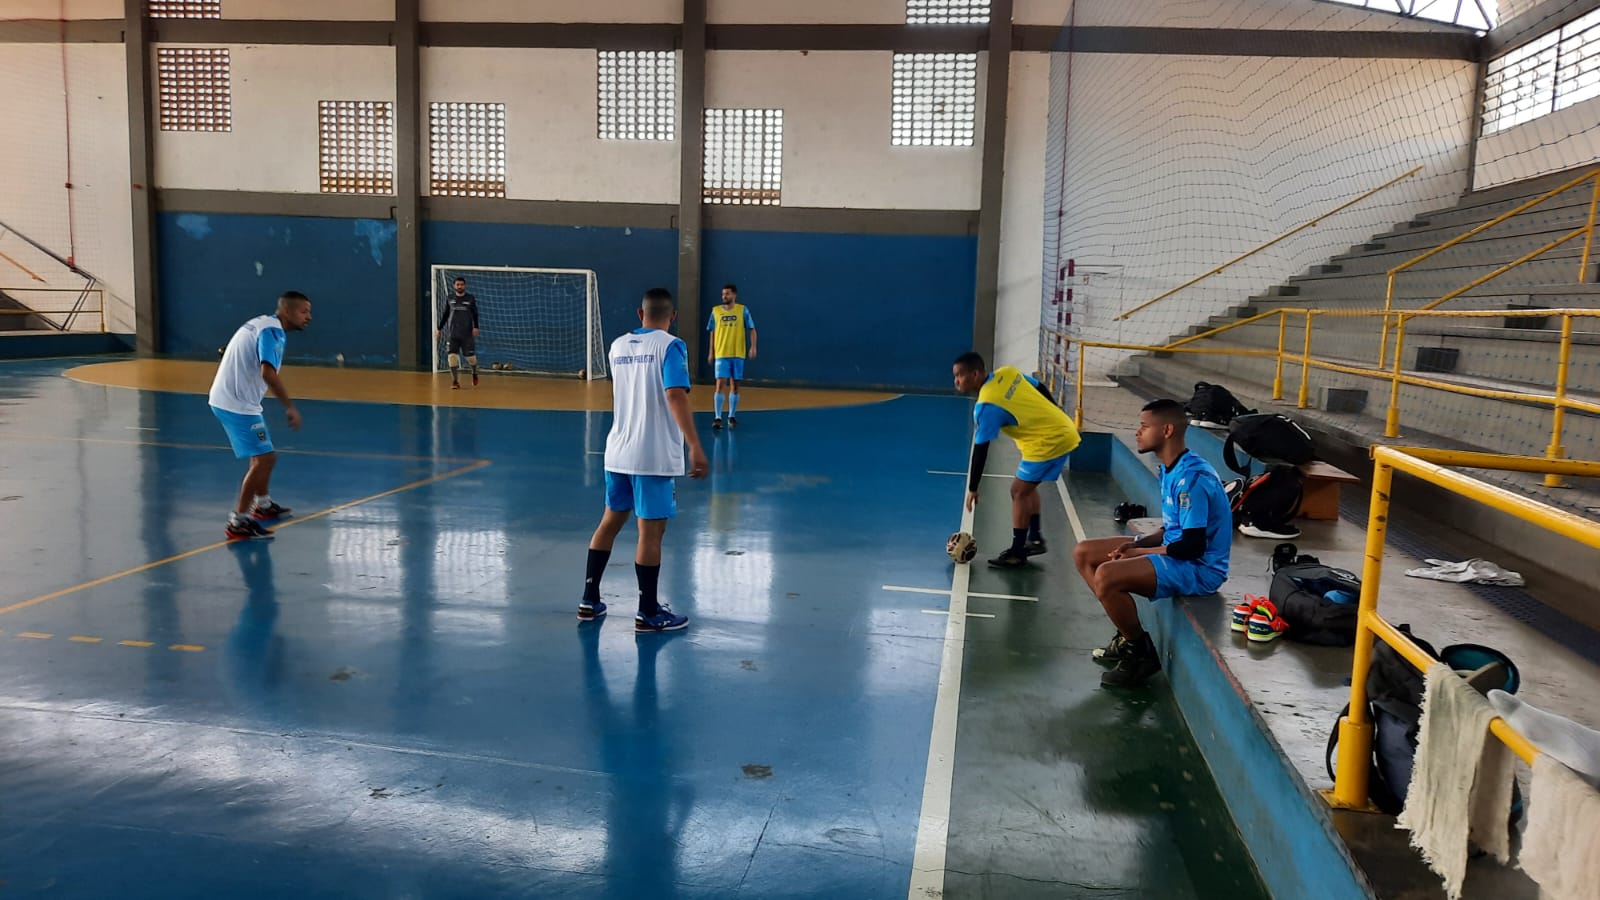 Futsal de Bragança Paulista vence primeiro amistoso preparatório